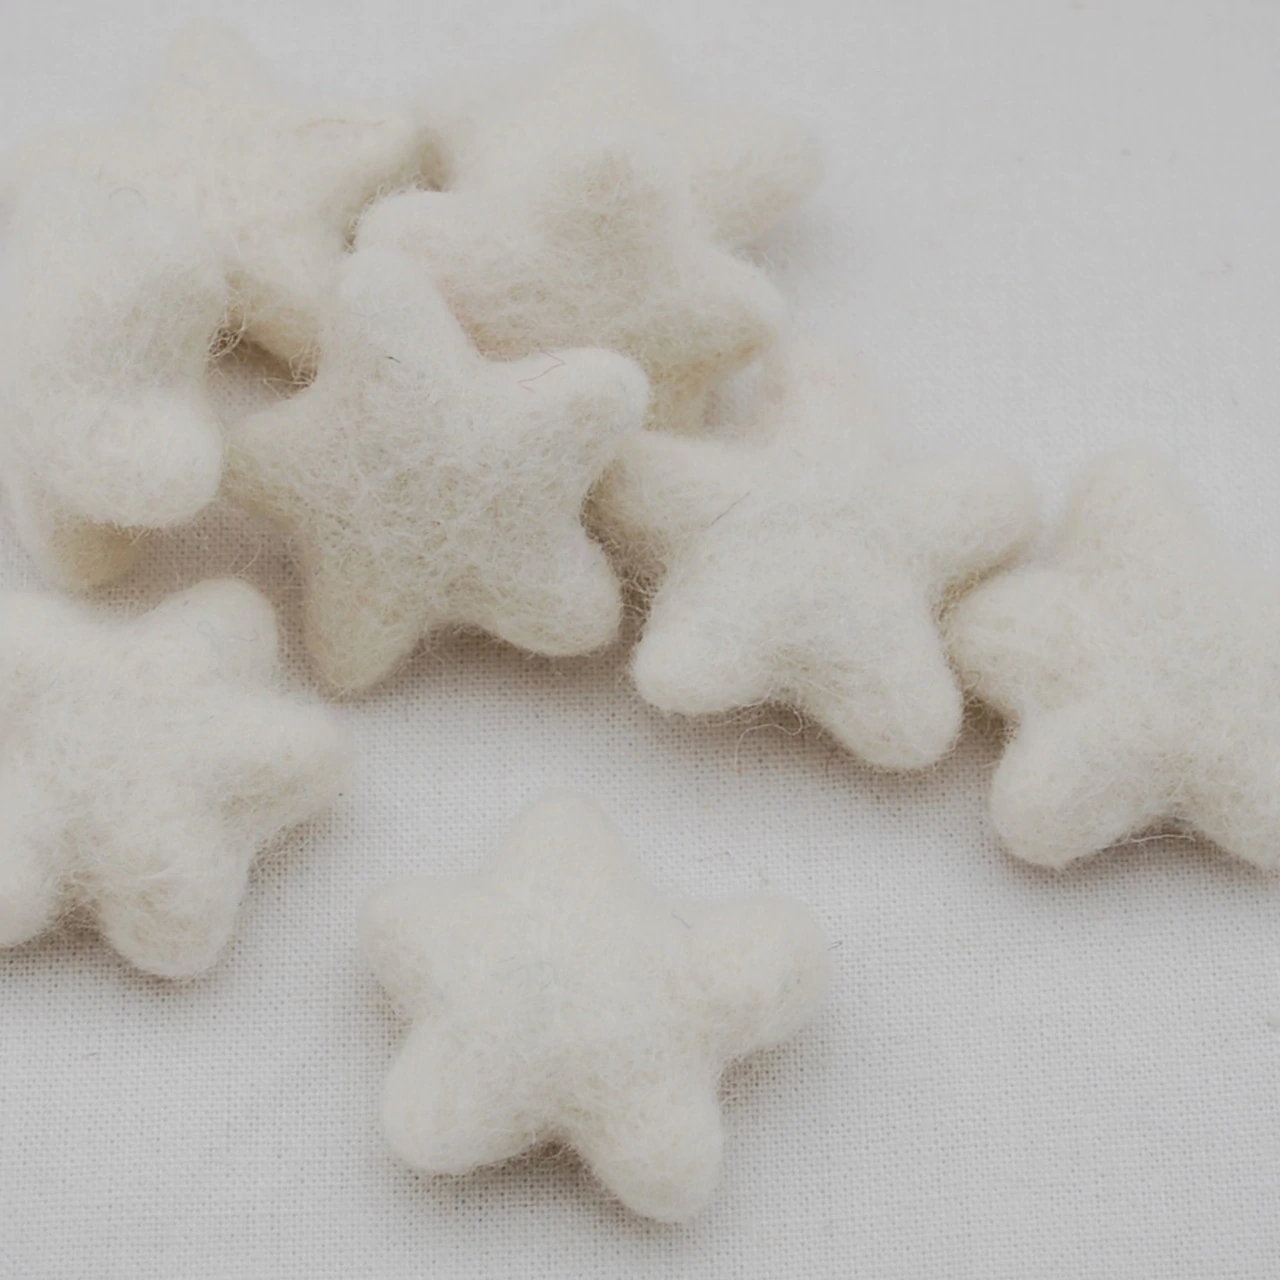 Handmade 100% Wool Star - 4-4.5cm - Ivory White